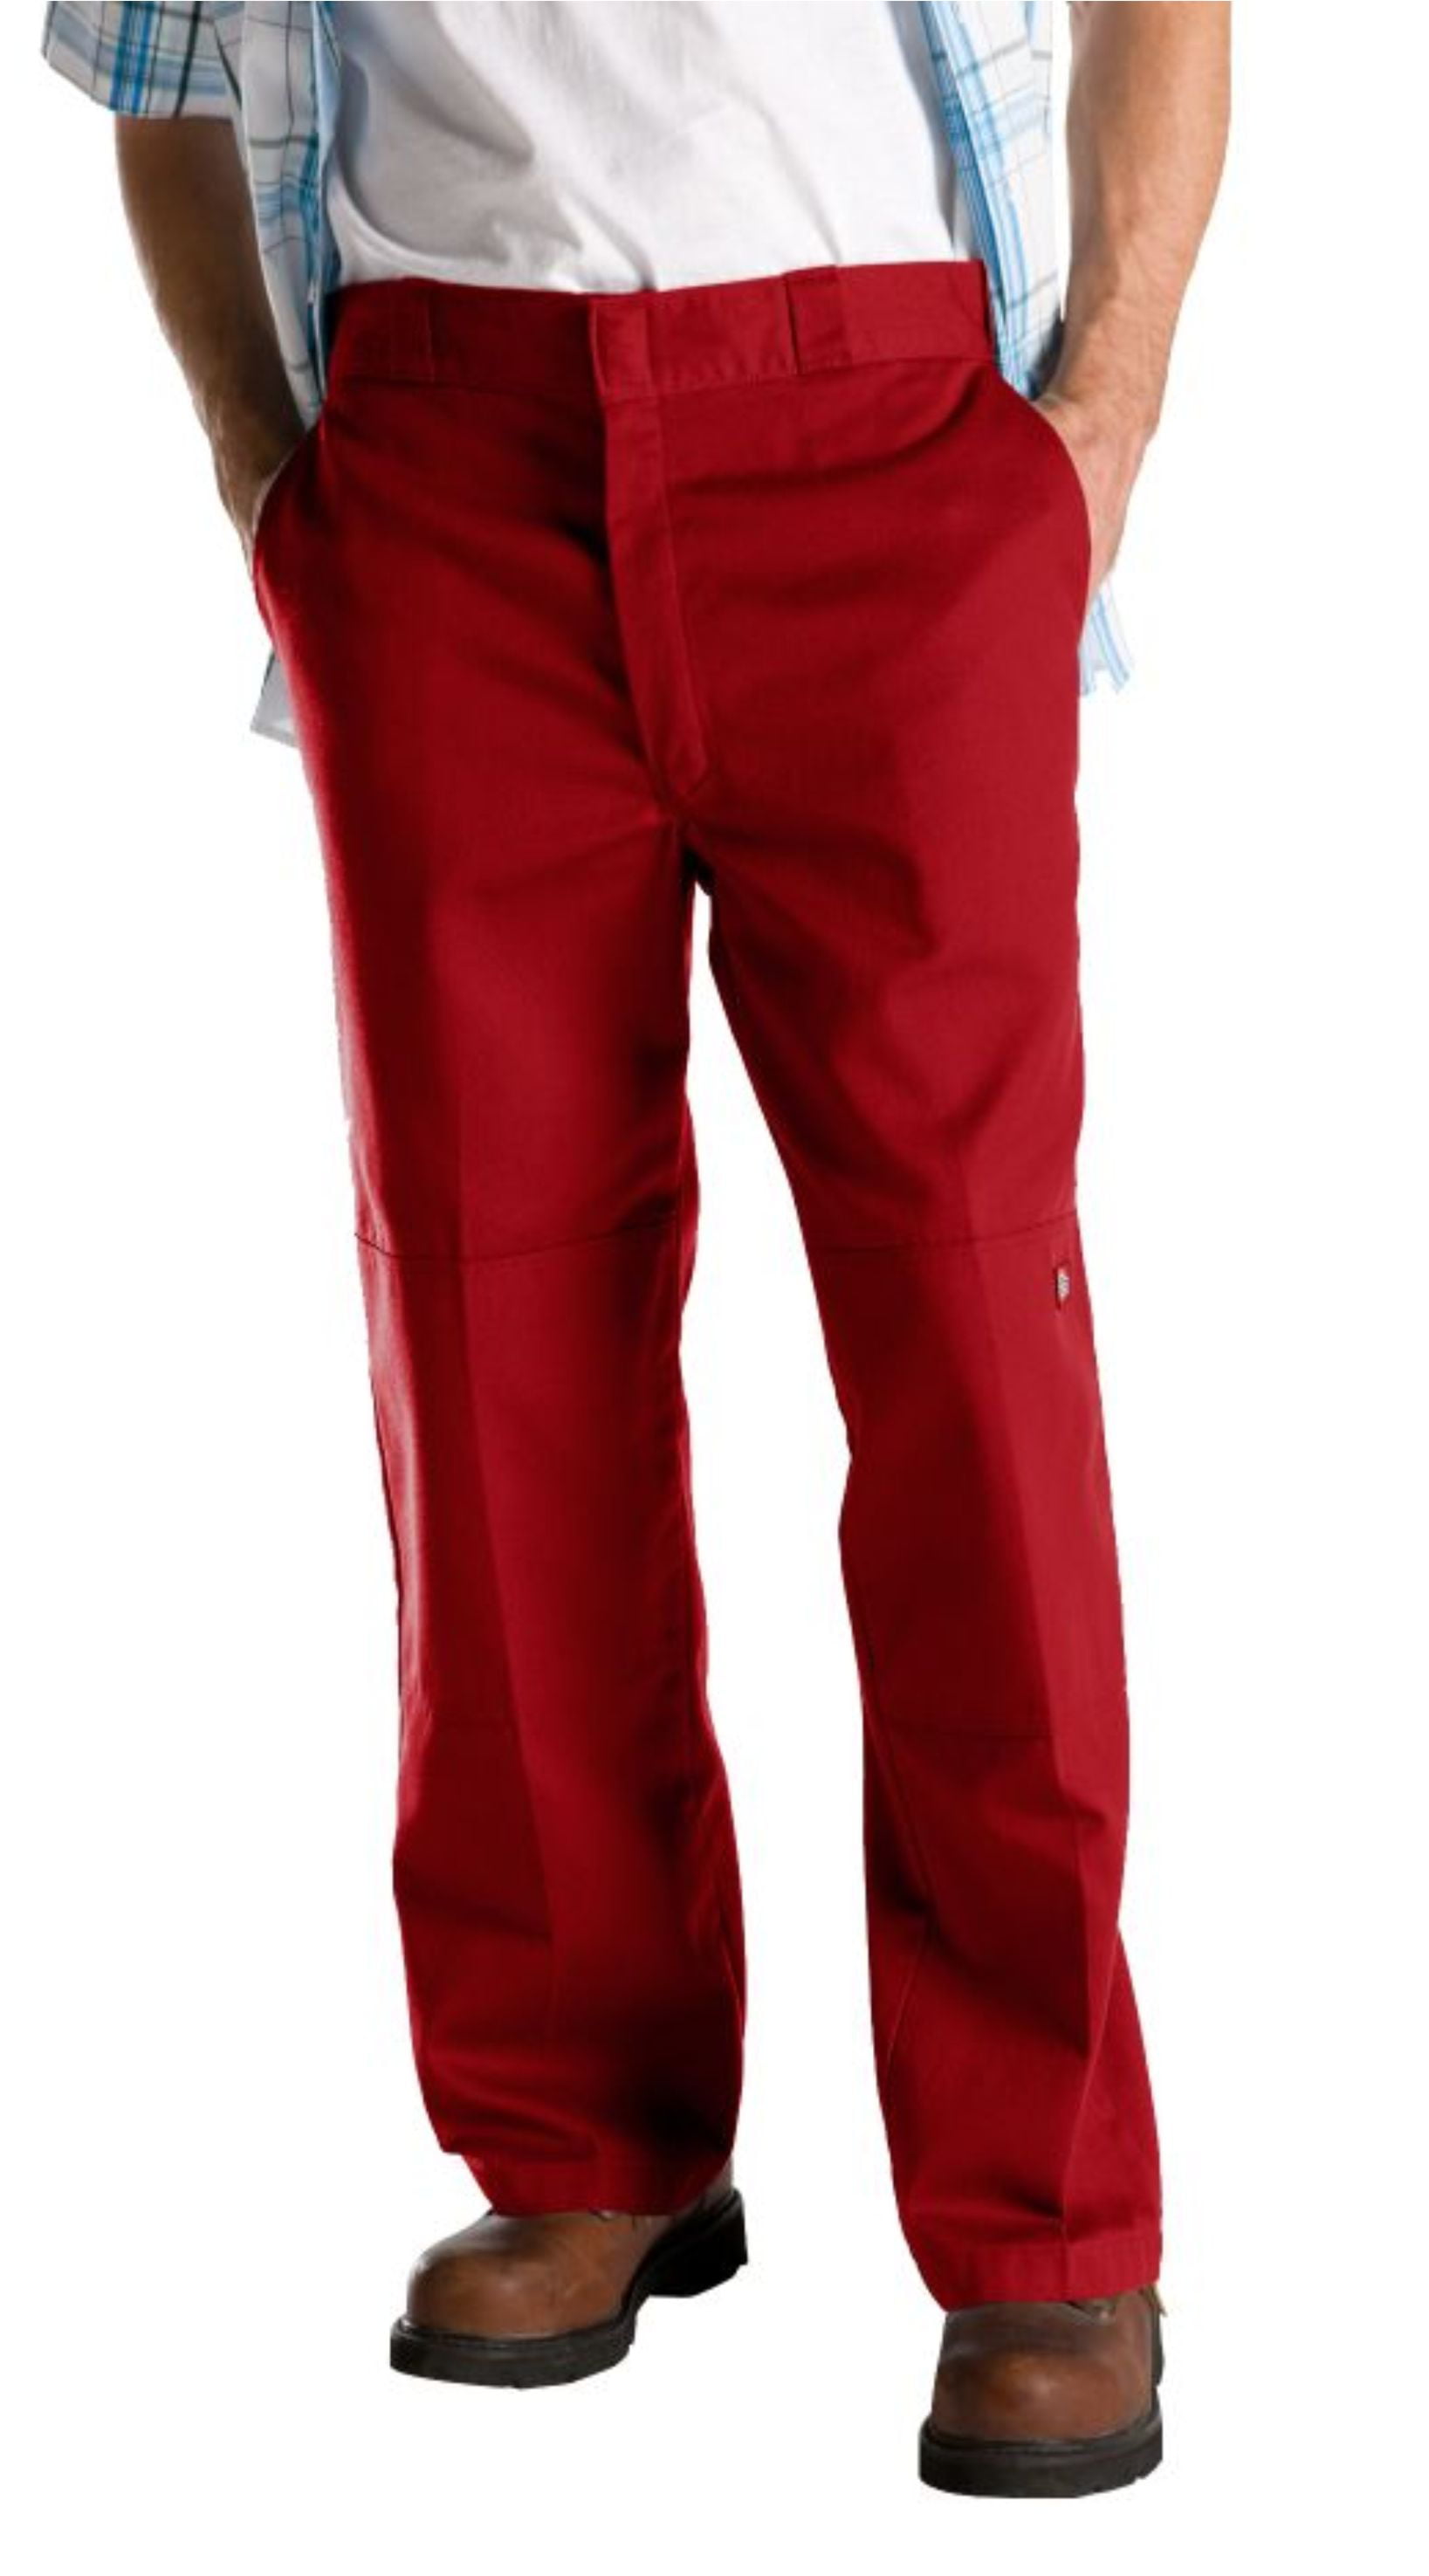 red loose pants